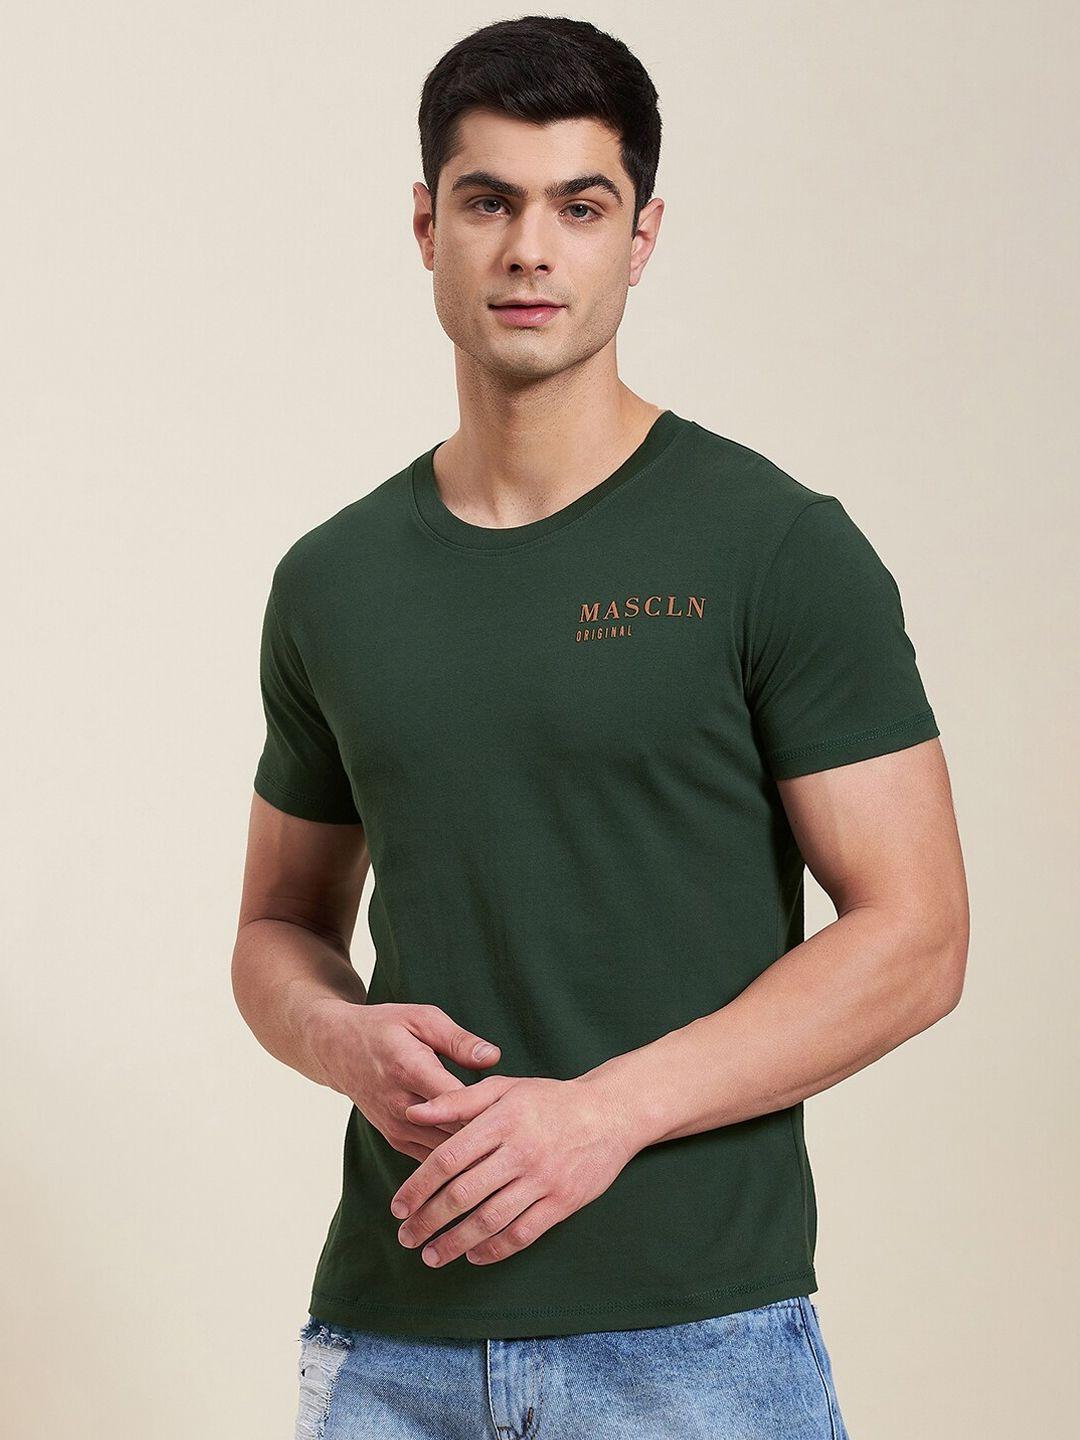 mascln sassafras men olive green solid pure cotton slim fit t-shirt